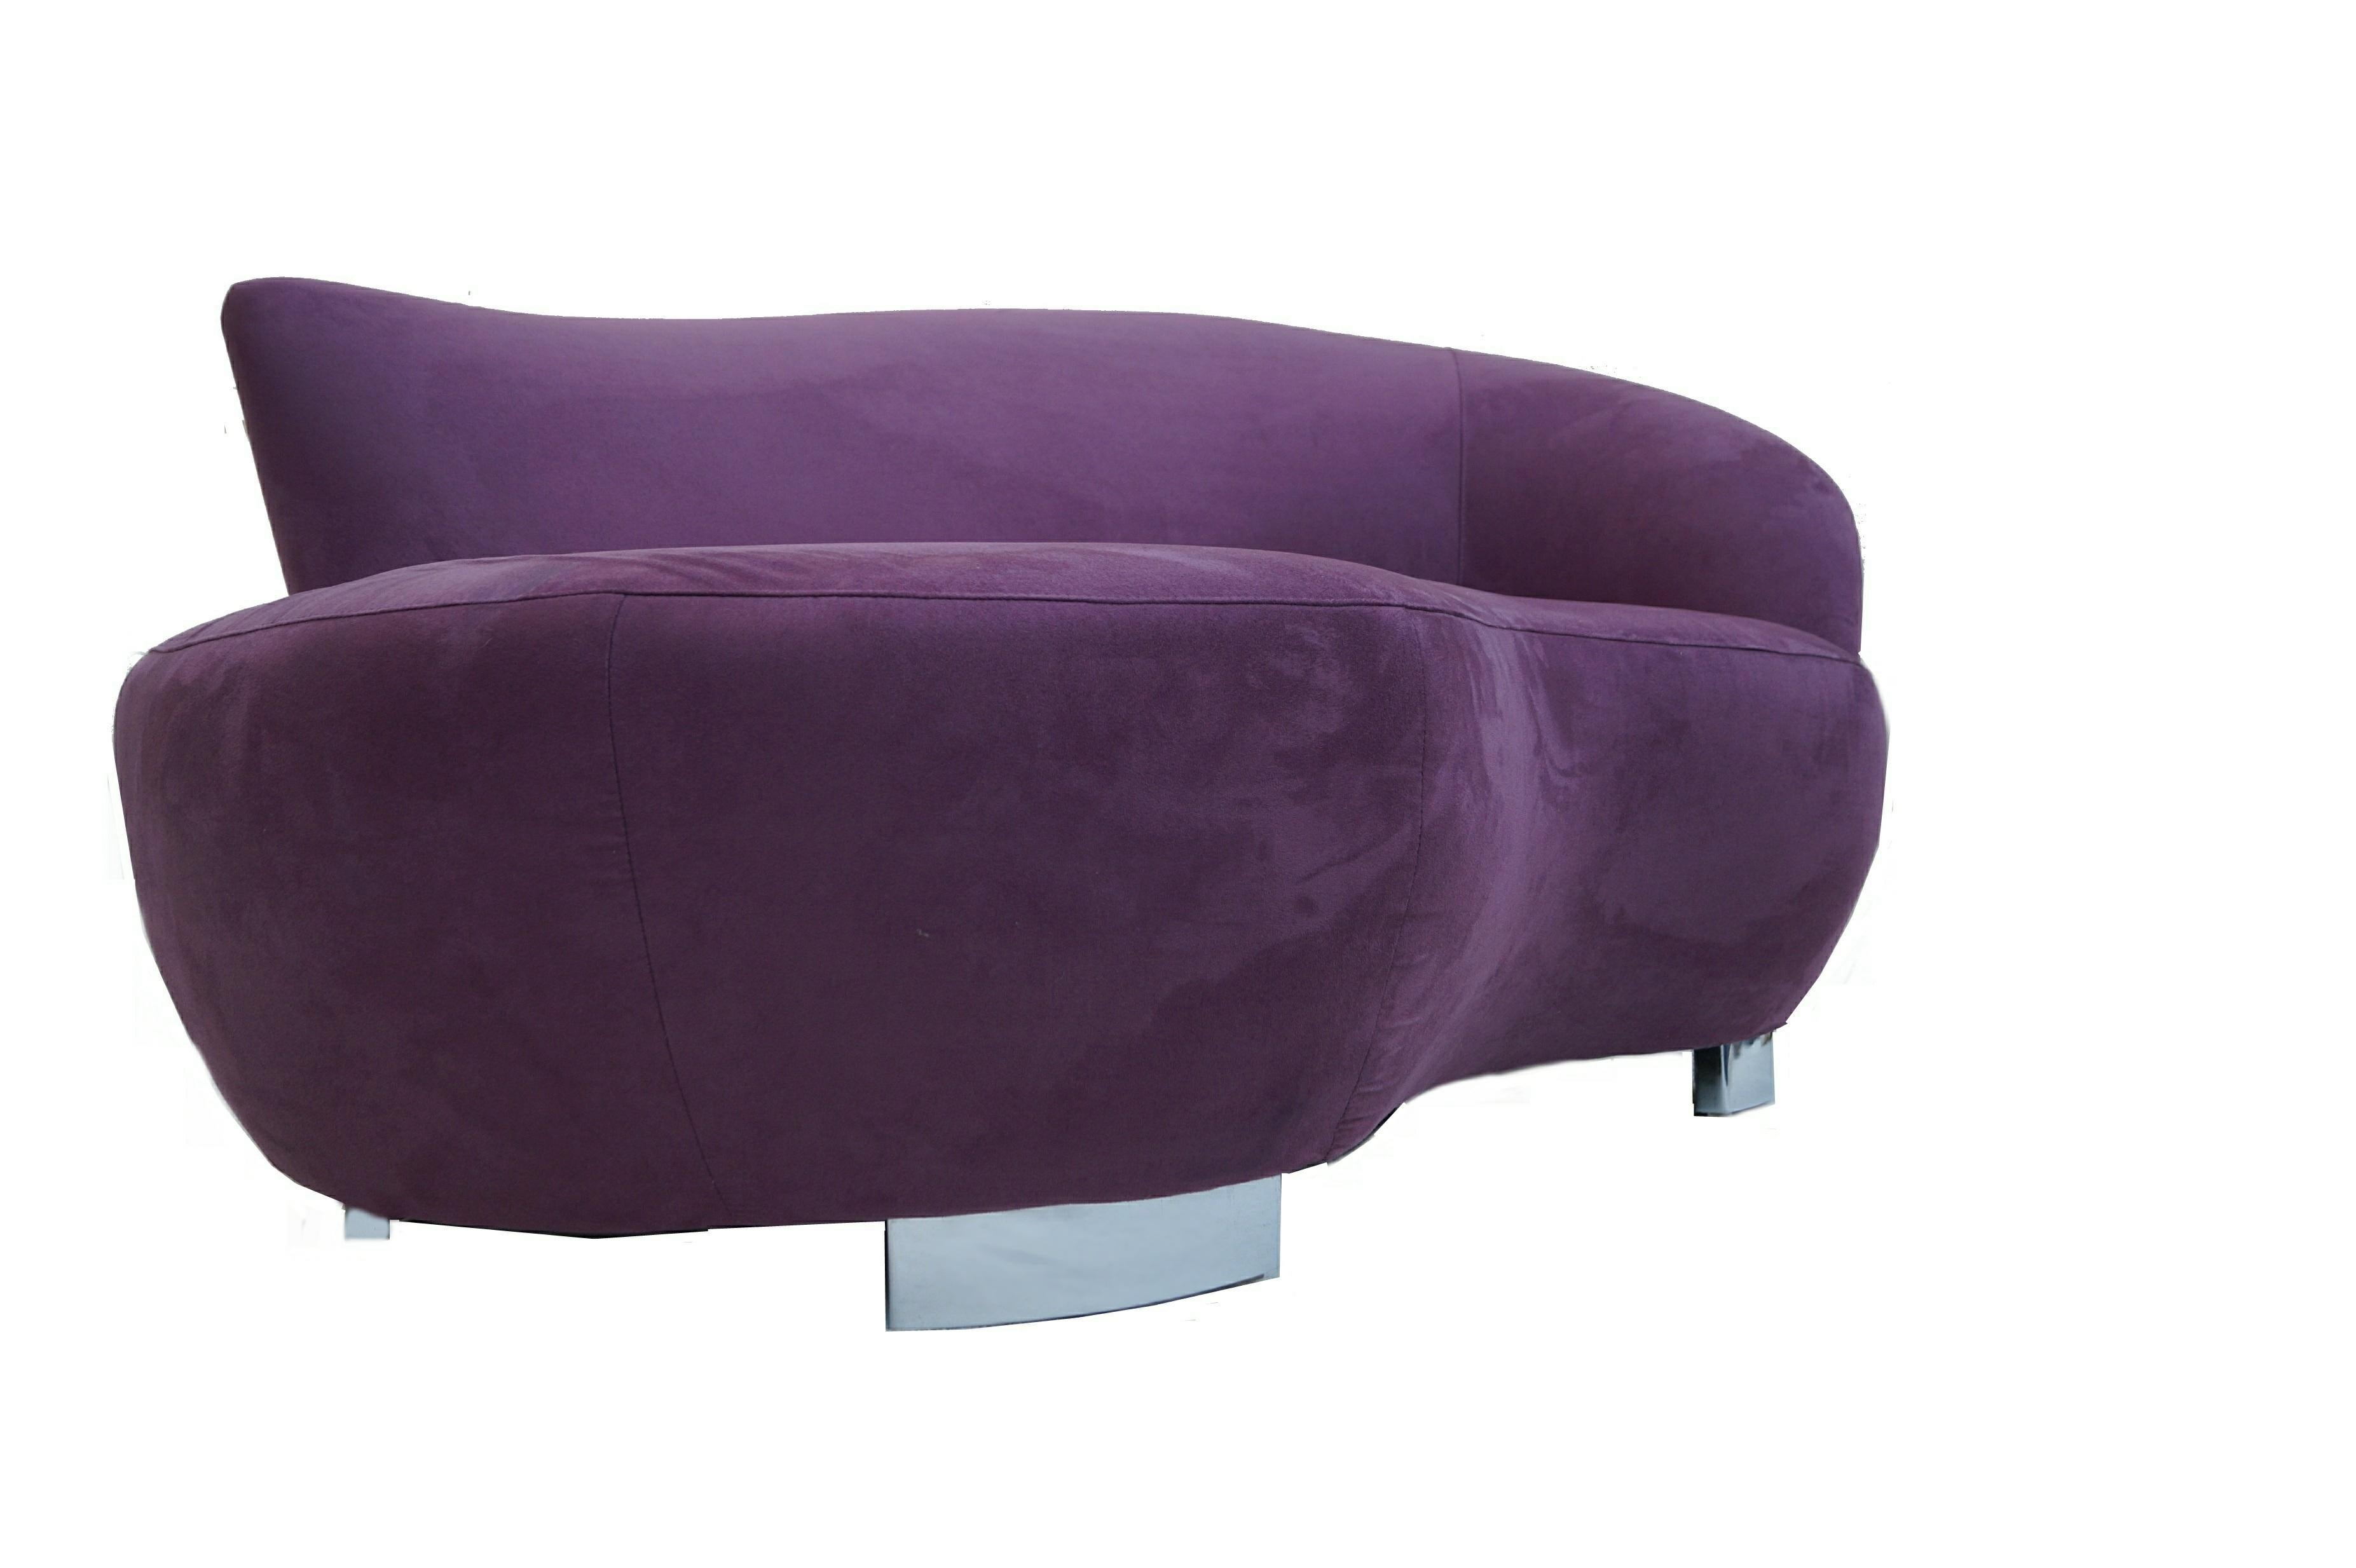 Mid-Century Modern Cloud Sofa Chaise Lounge Settee Loveseat by Vladimir Kagan